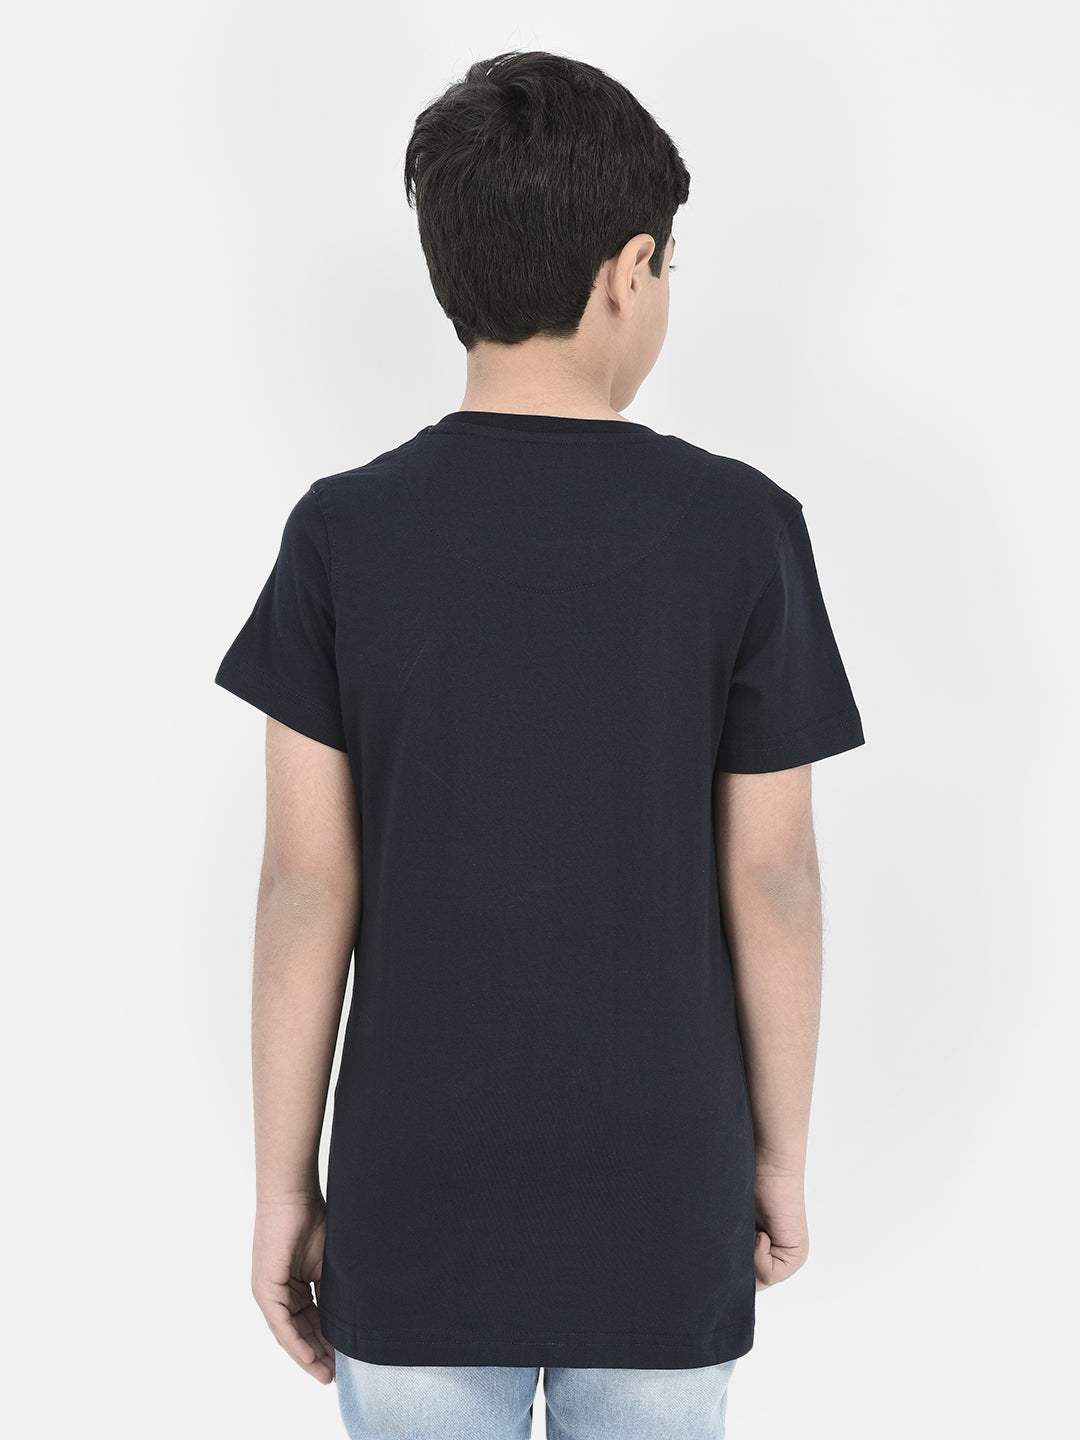 Navy Blue Printed Round Neck T-shirt-Boys T-Shirts-Crimsoune Club